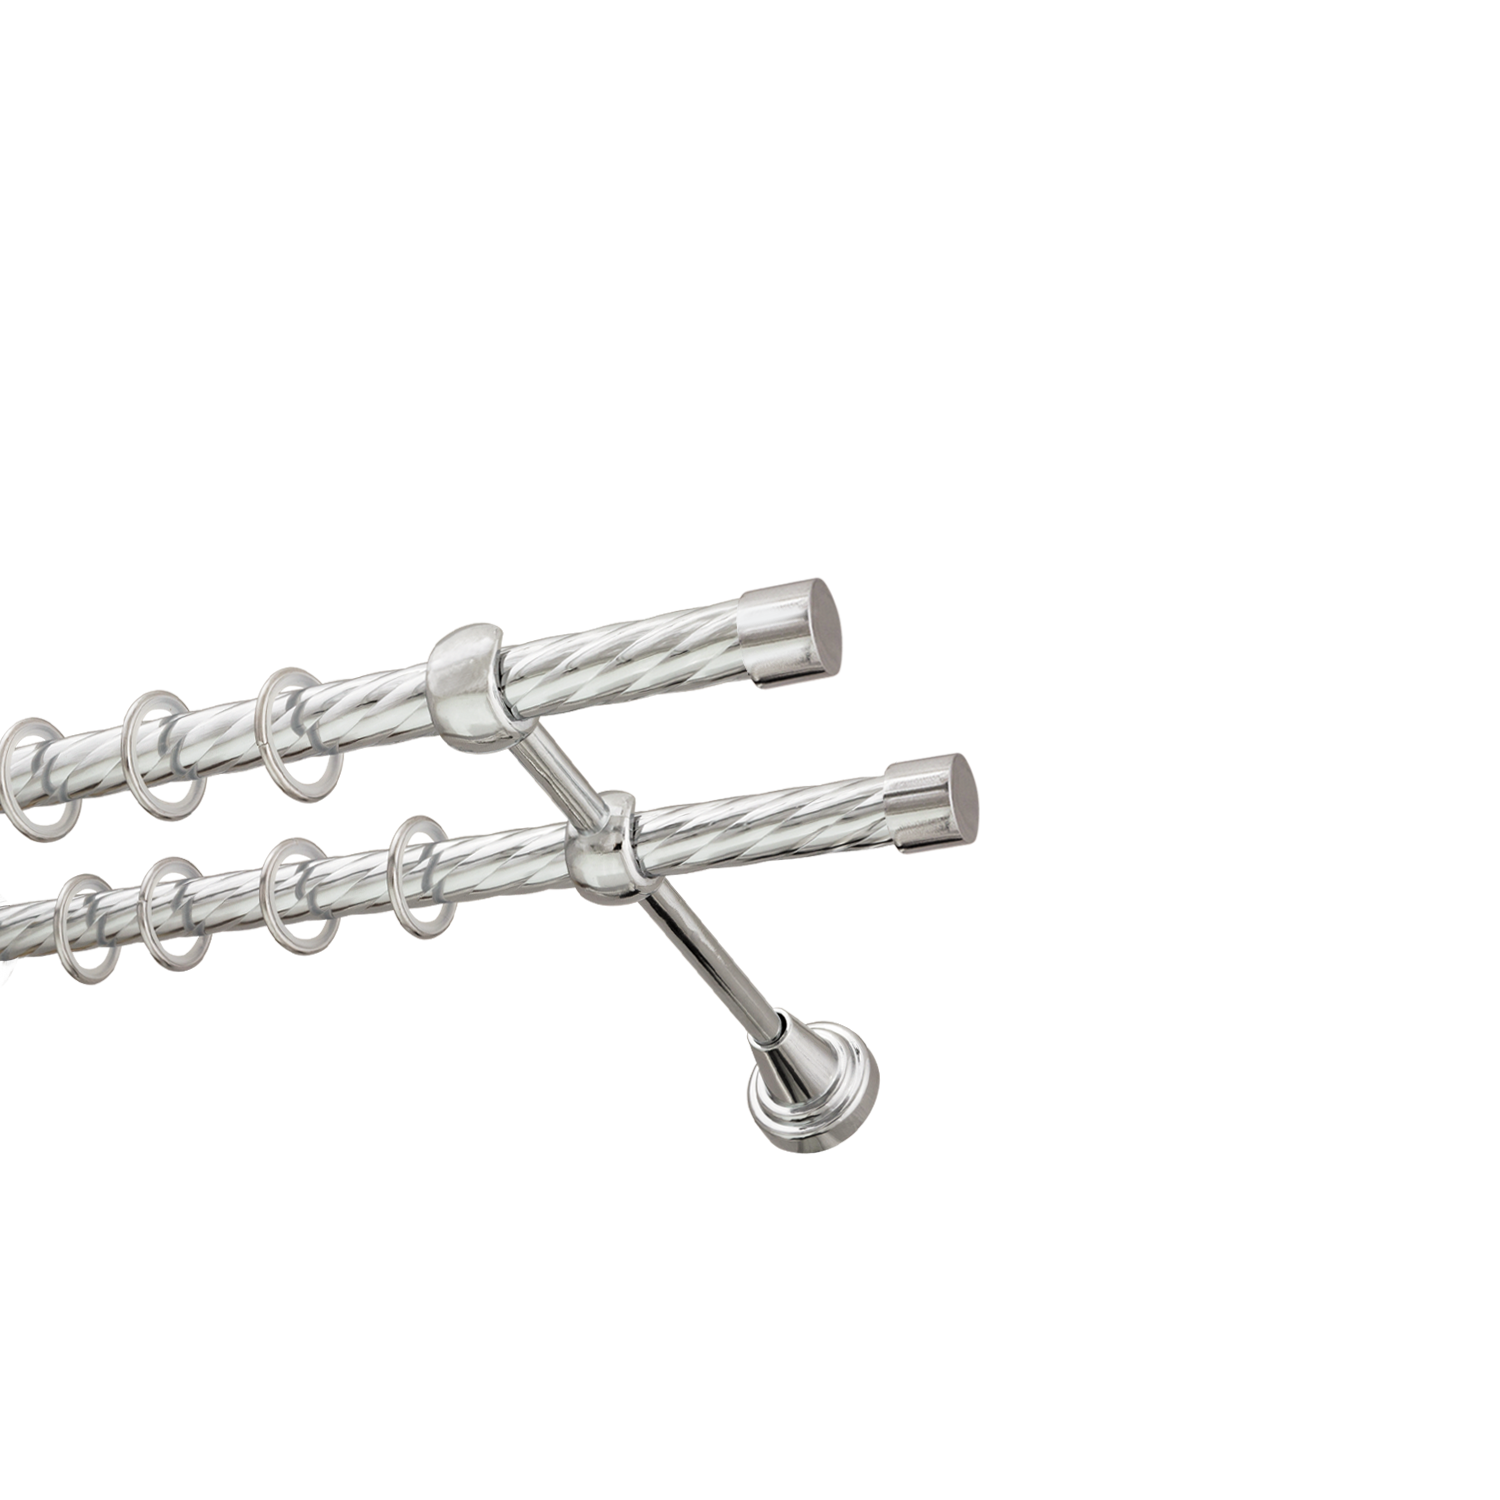 Металлический карниз для штор Заглушка, двухрядный 16/16 мм, серебро, витая штанга, длина 140 см - фото Wikidecor.ru